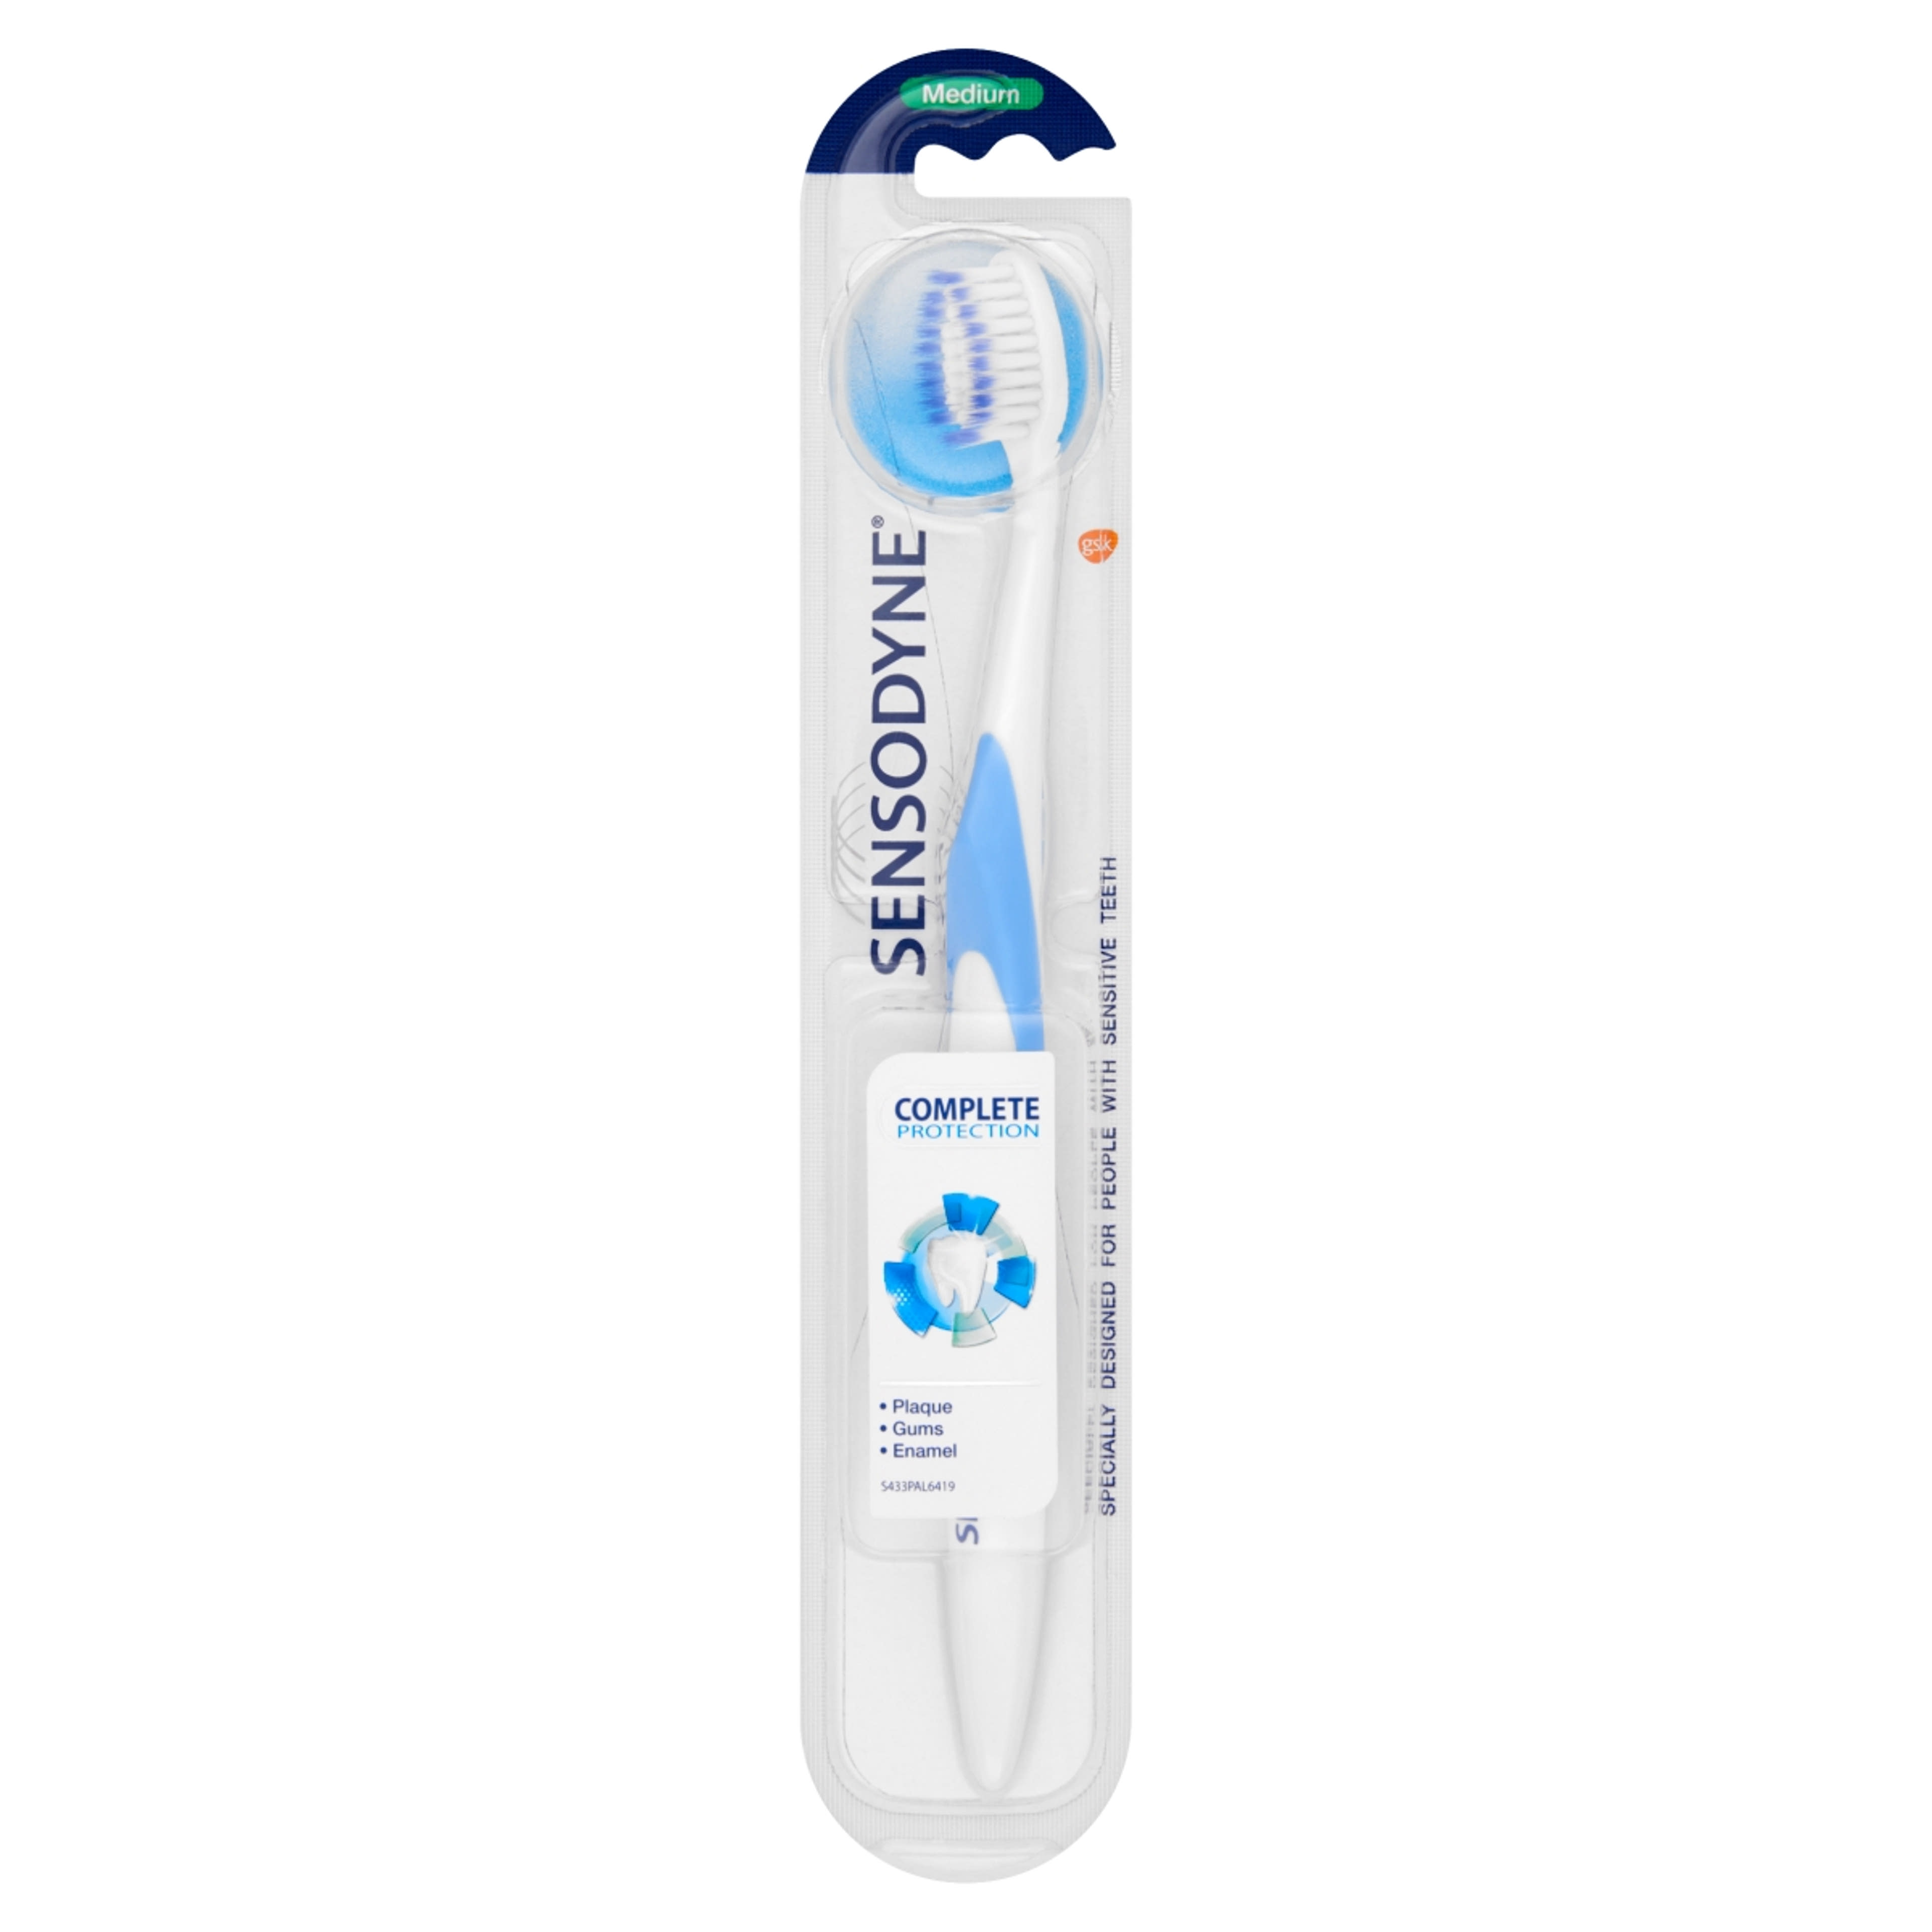 Sensodyne Complete Protection Medium fogkefe - 1 db-1